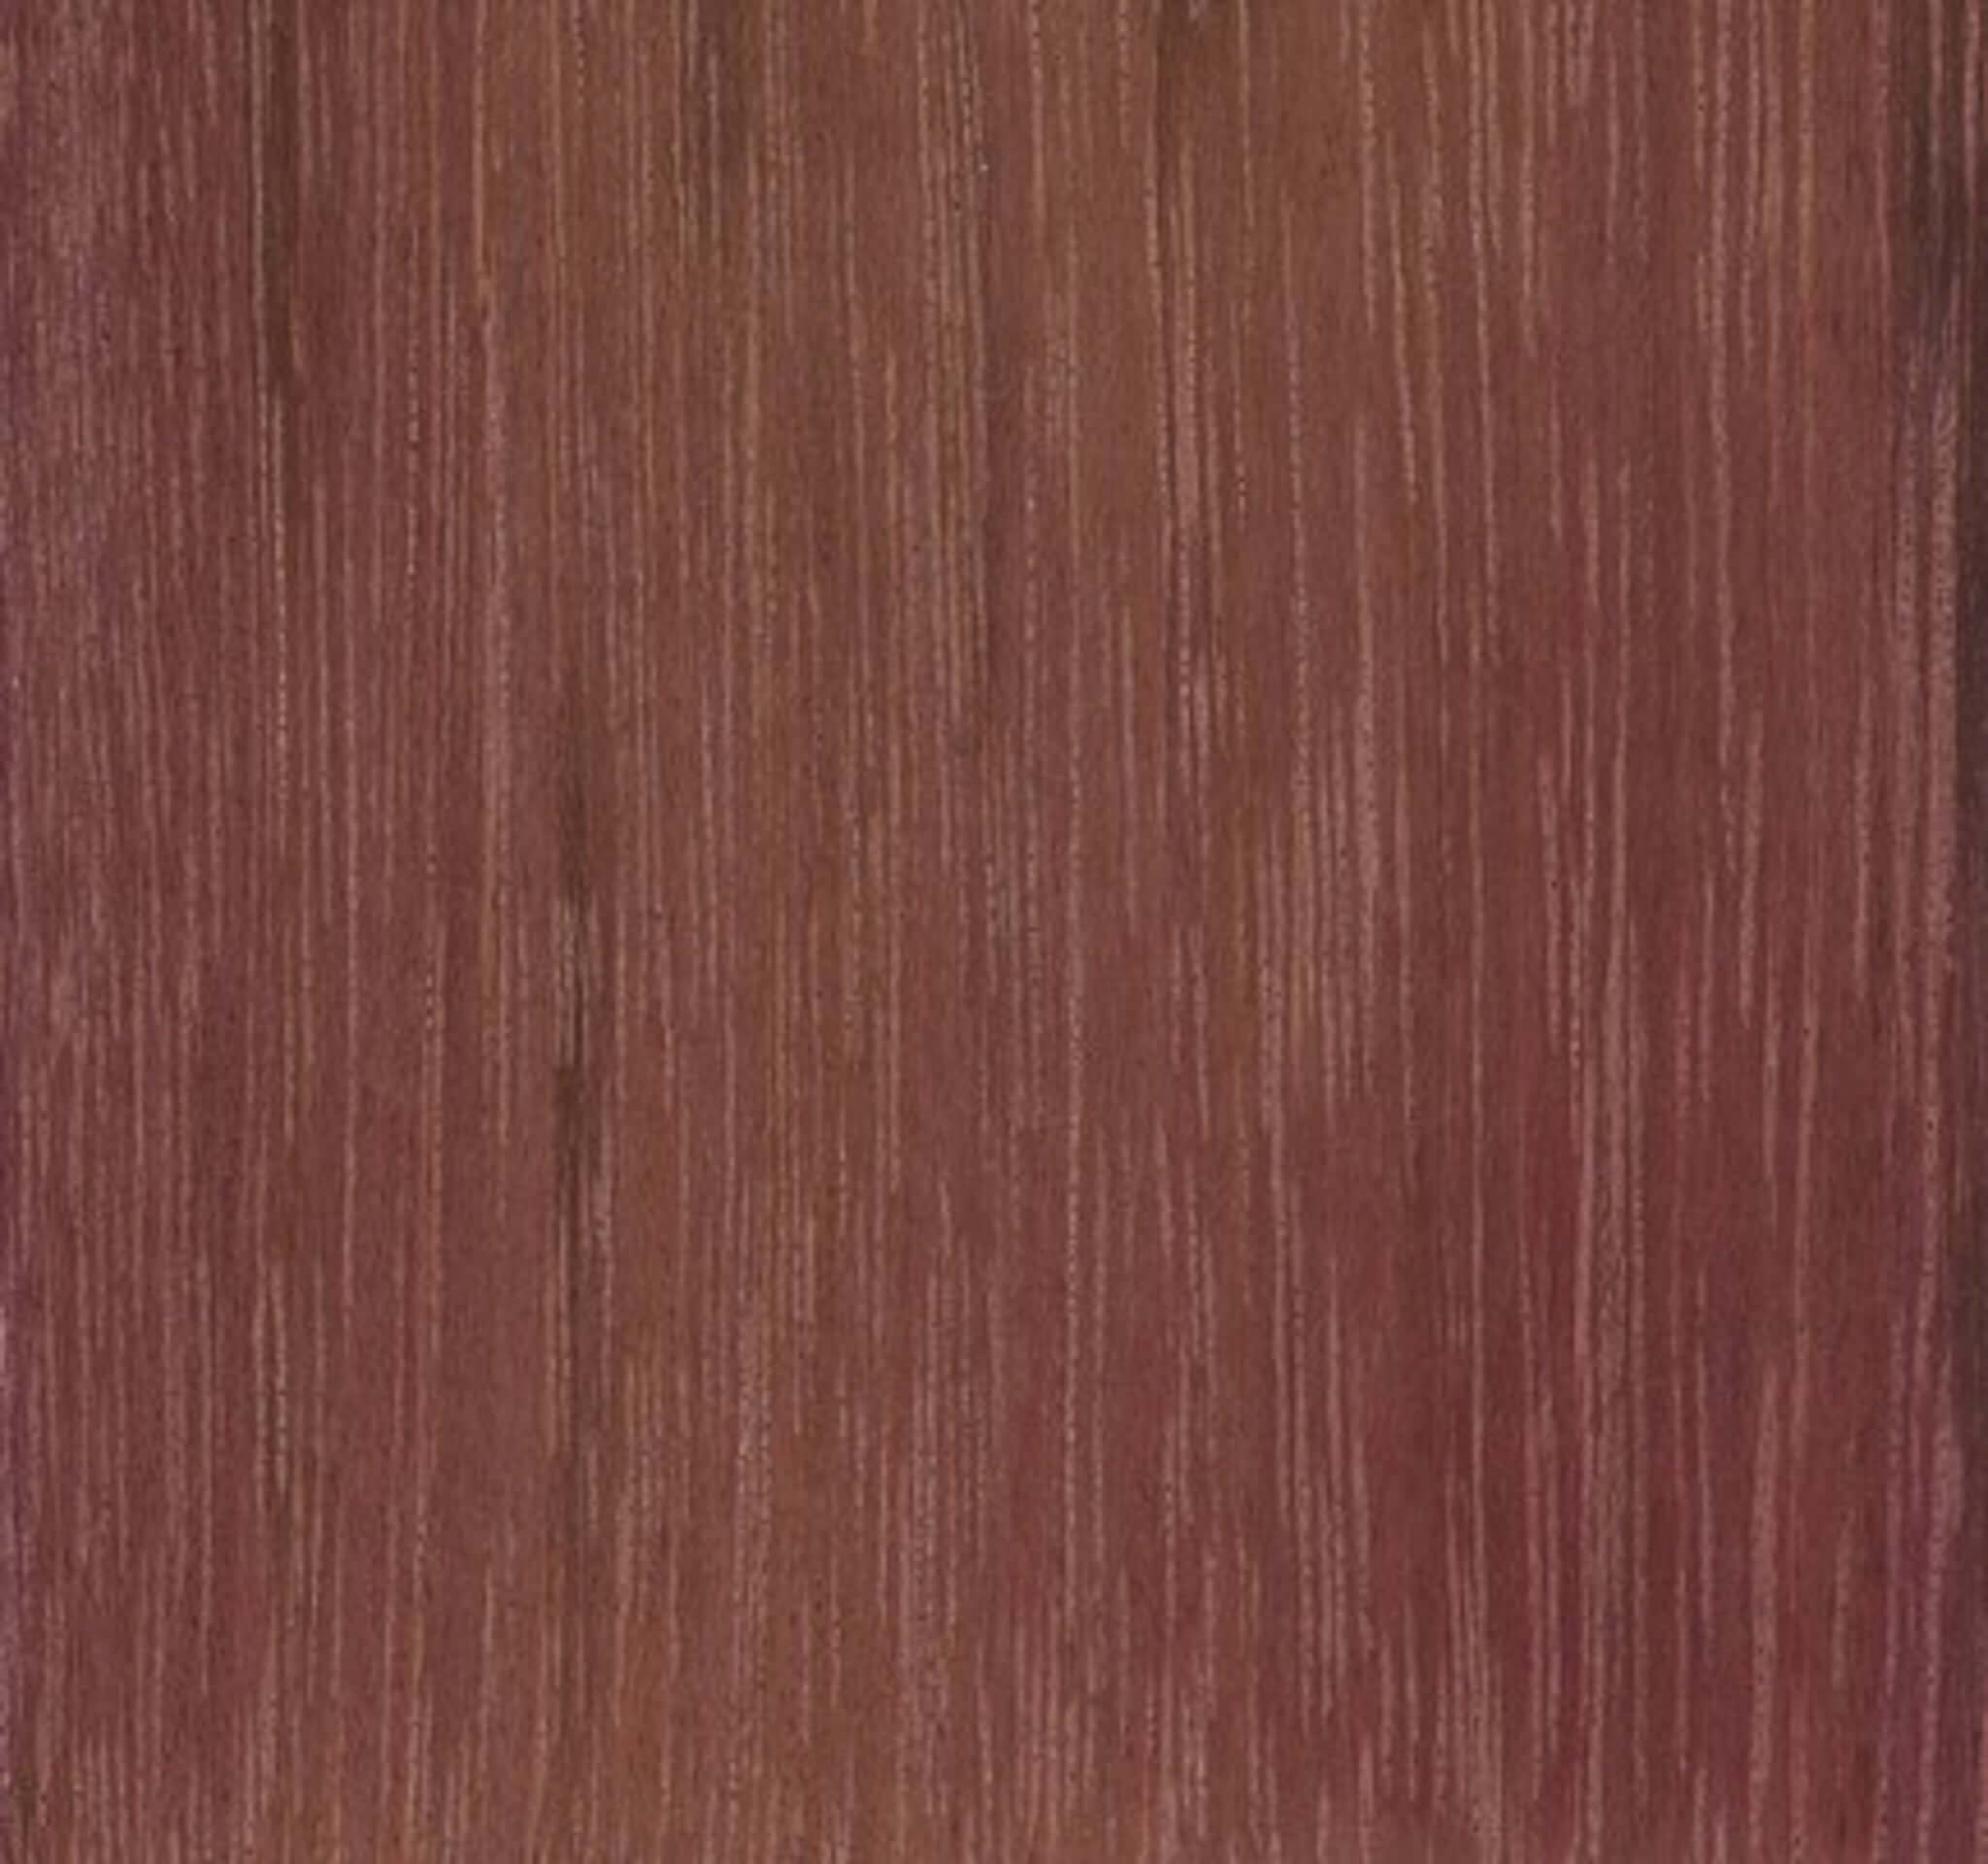 a sample of purpleheart wood